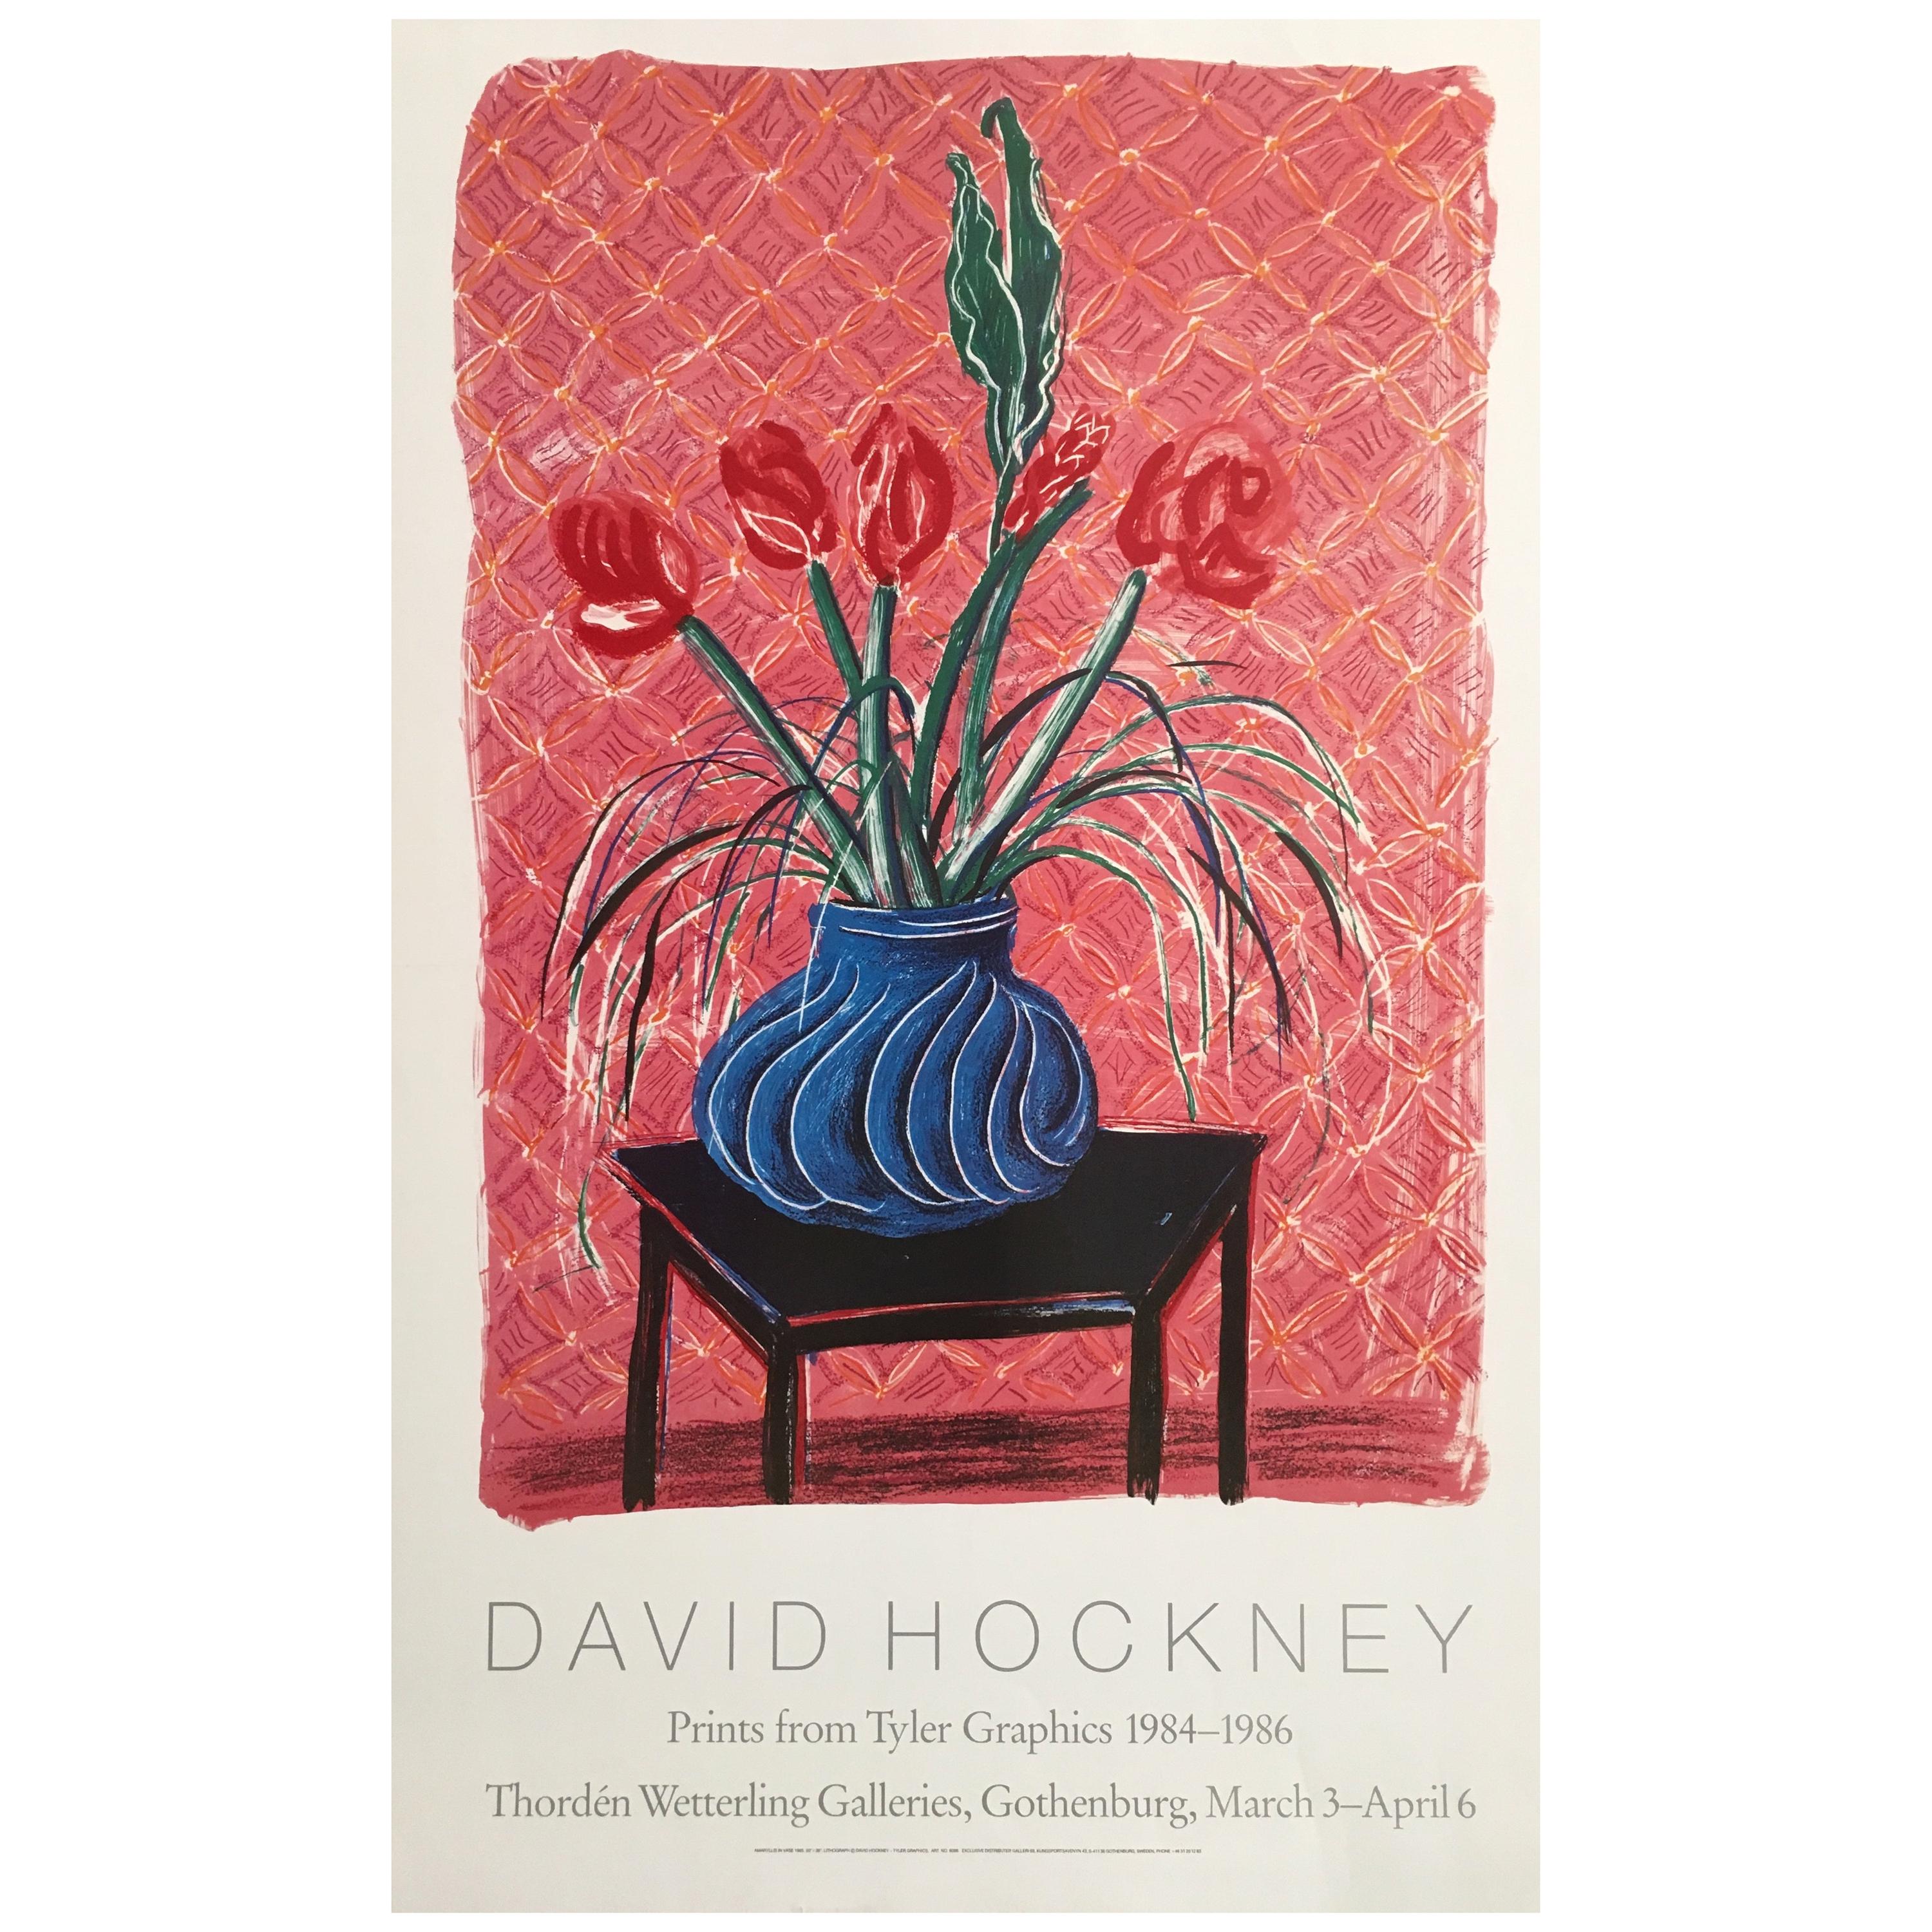 Original Vintage Poster David Hockney, 'Prints From Tyler Graphics, 1984-1986'